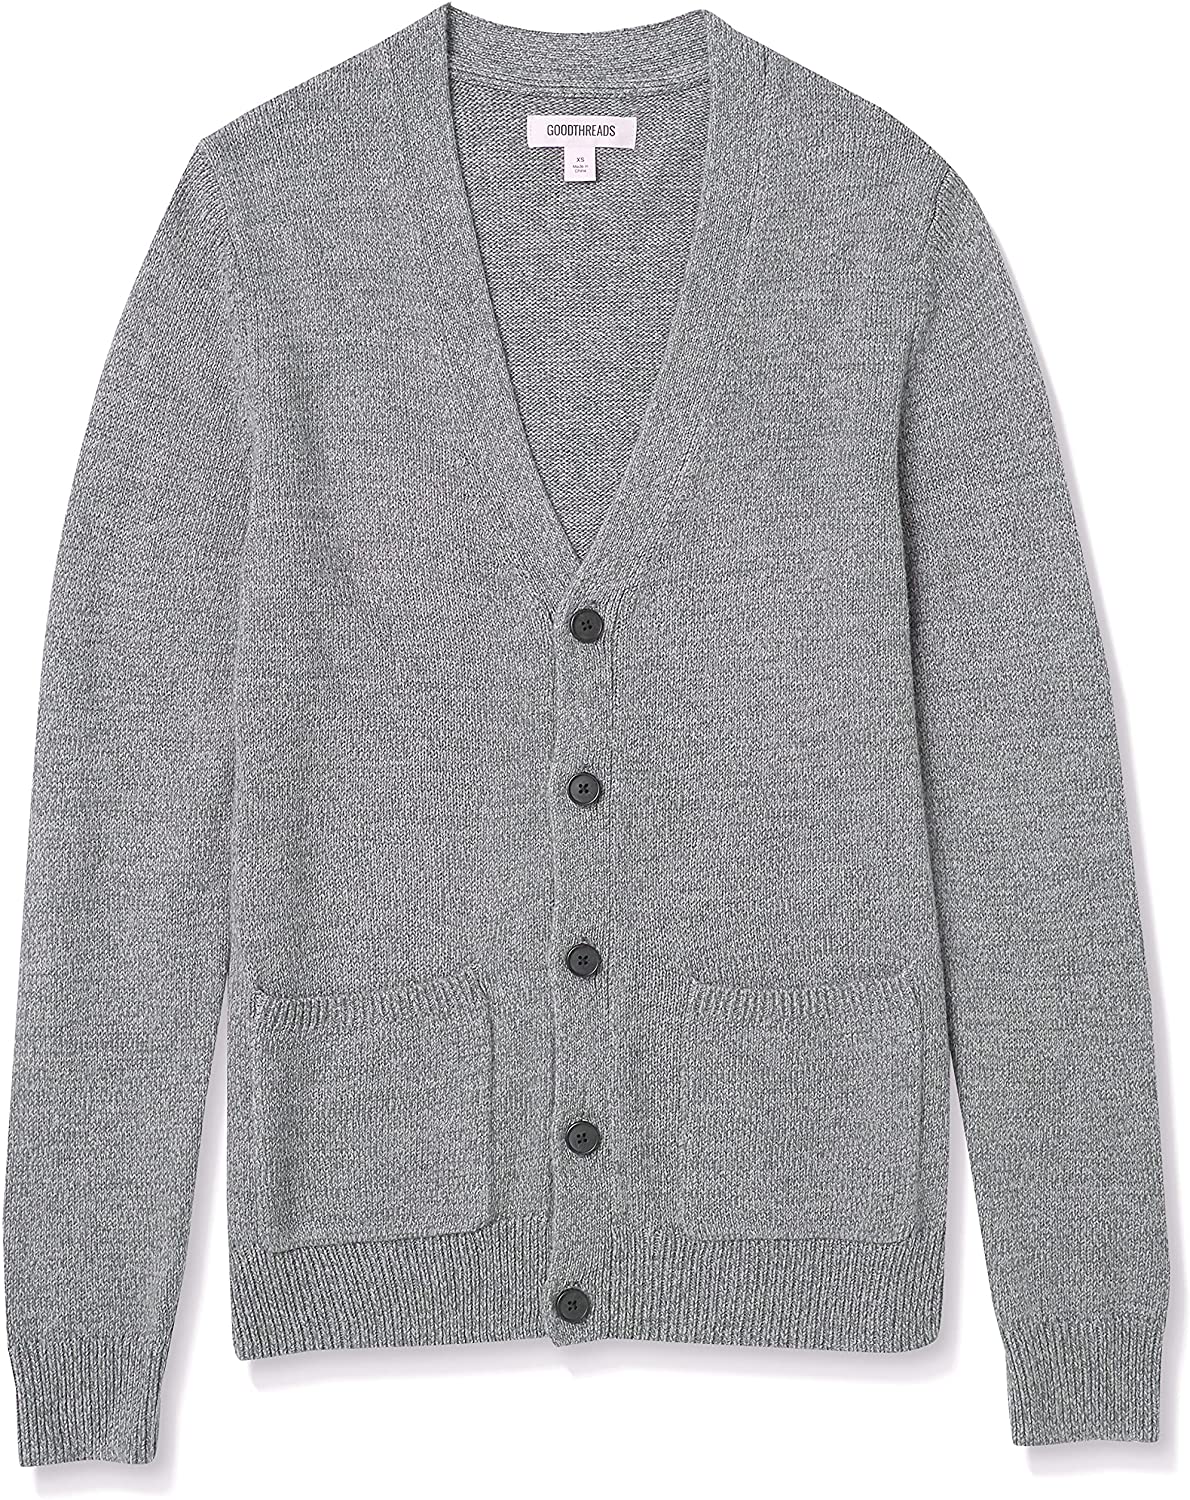 Brand Goodthreads Men's Supersoft Marled Cardigan Sweater 